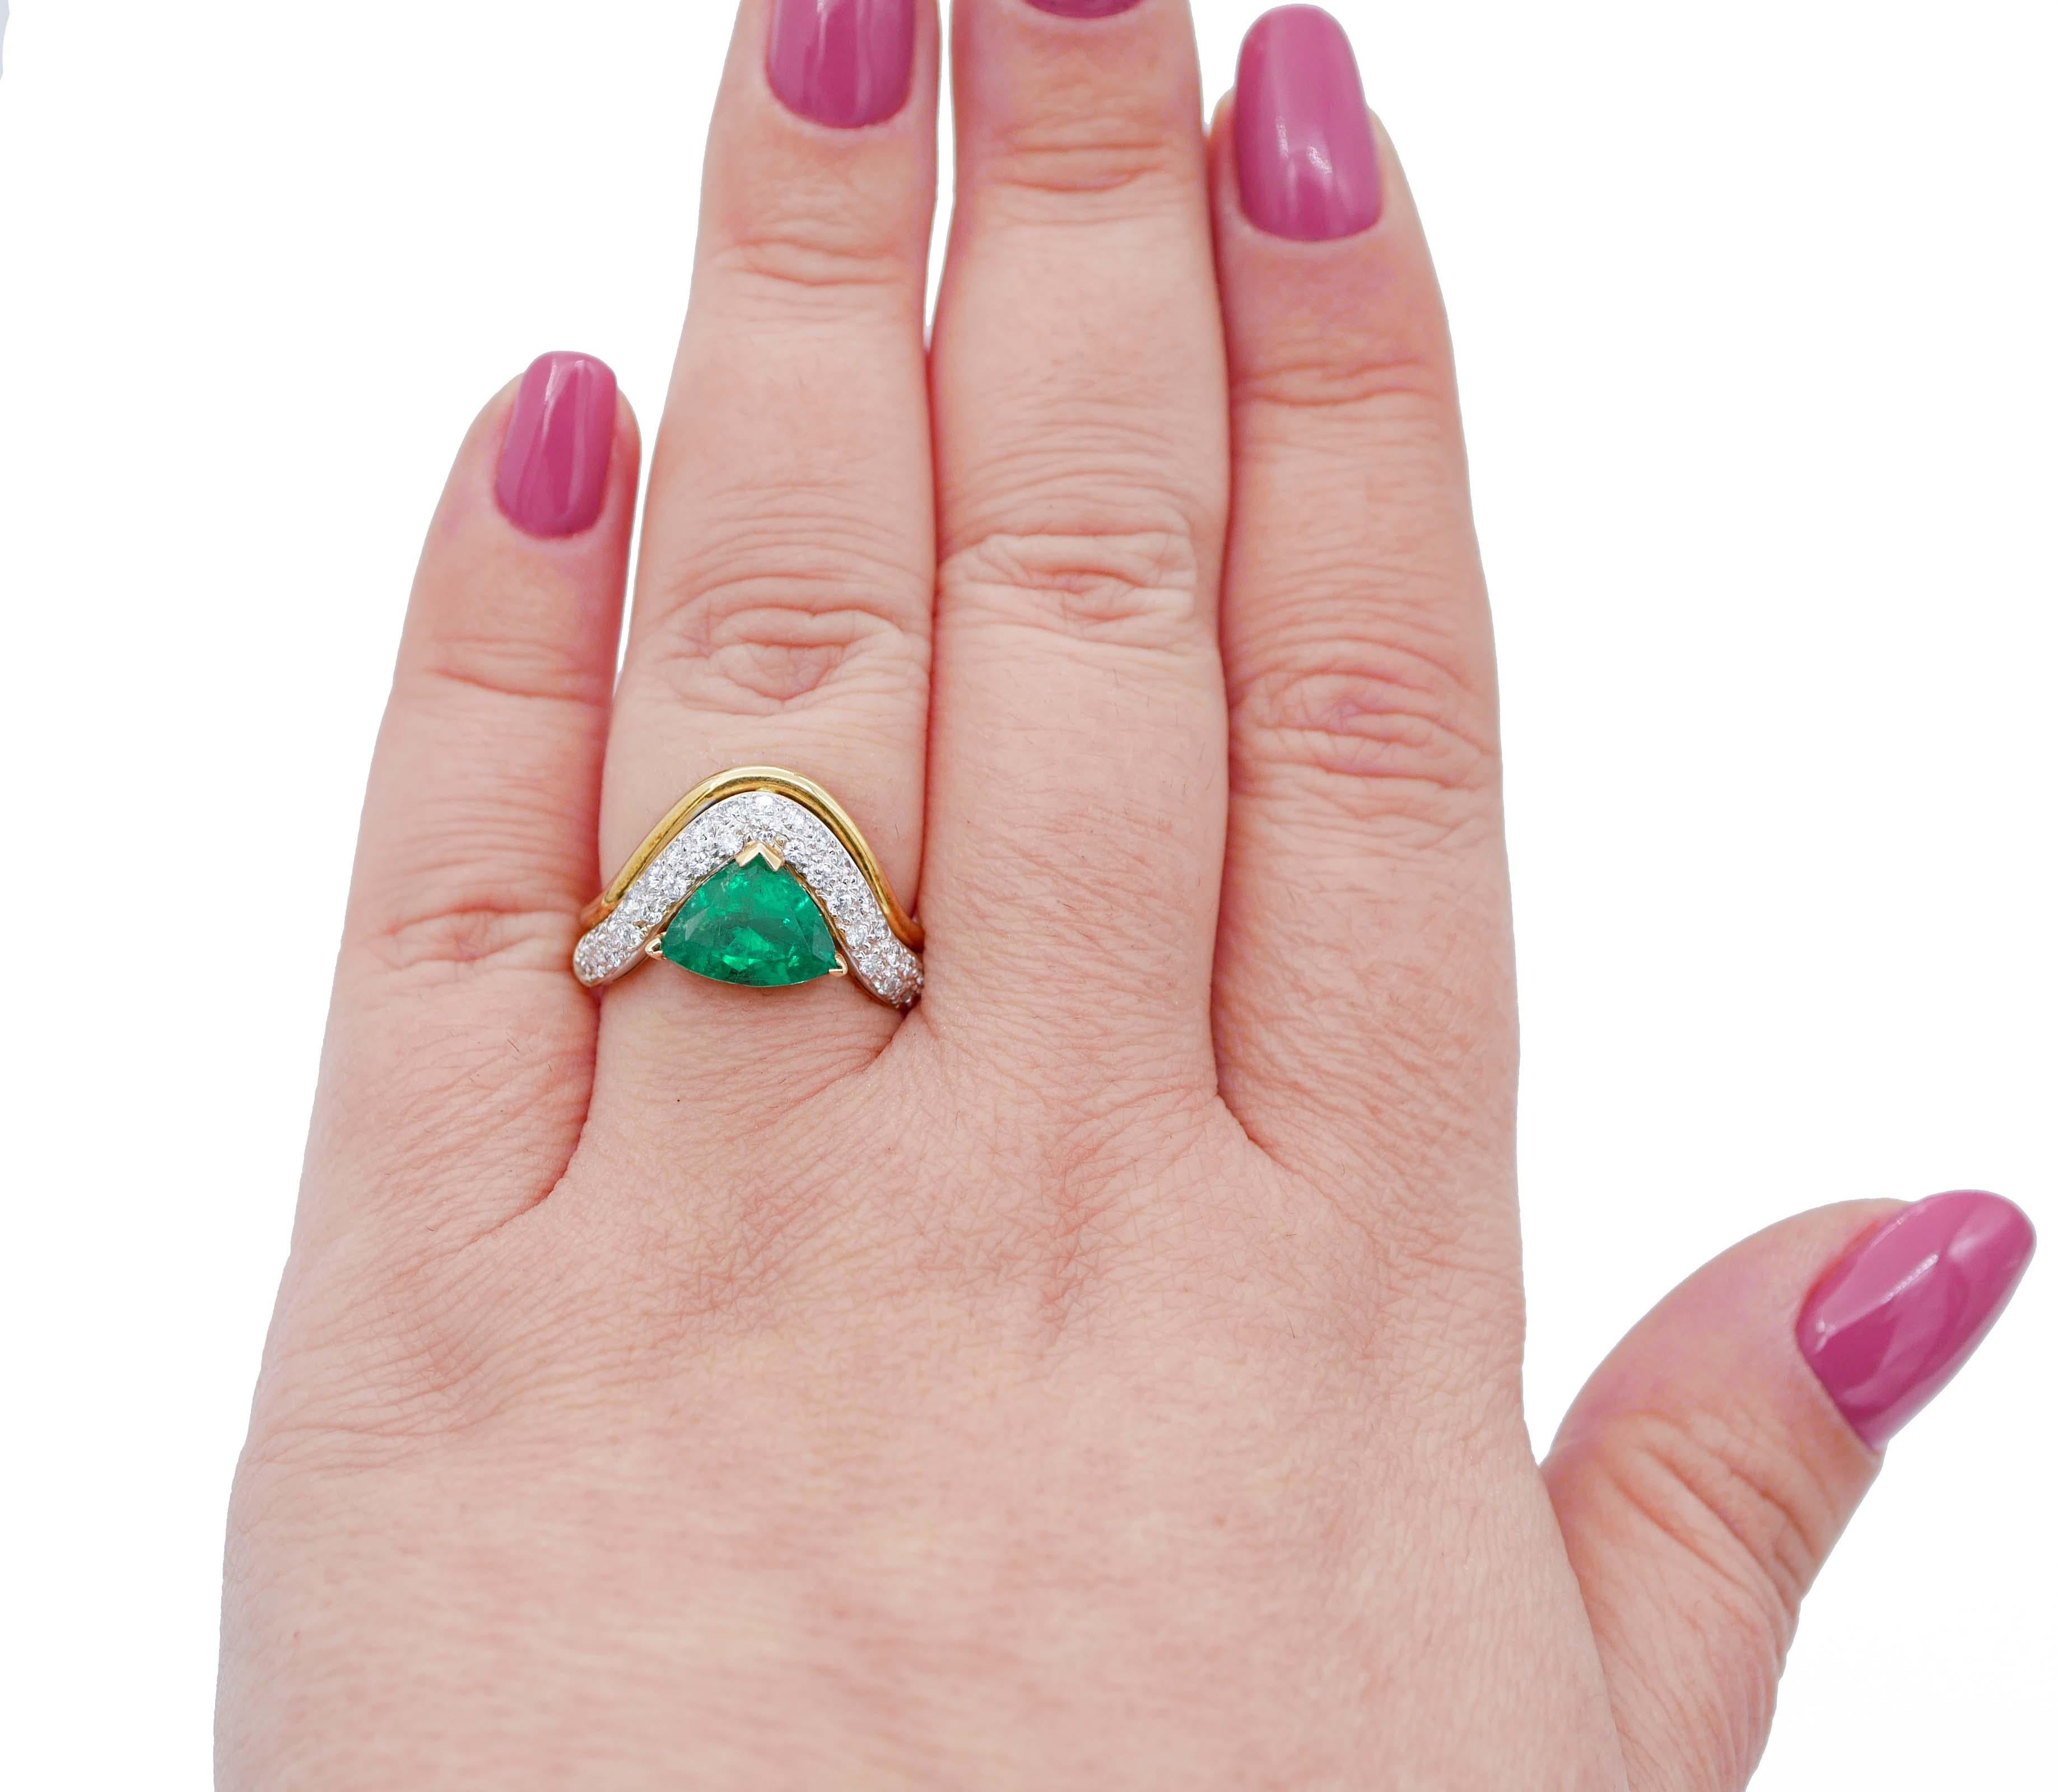 Mixed Cut Emerald, Diamonds, 18 Karat Yellow and White Gold Ring